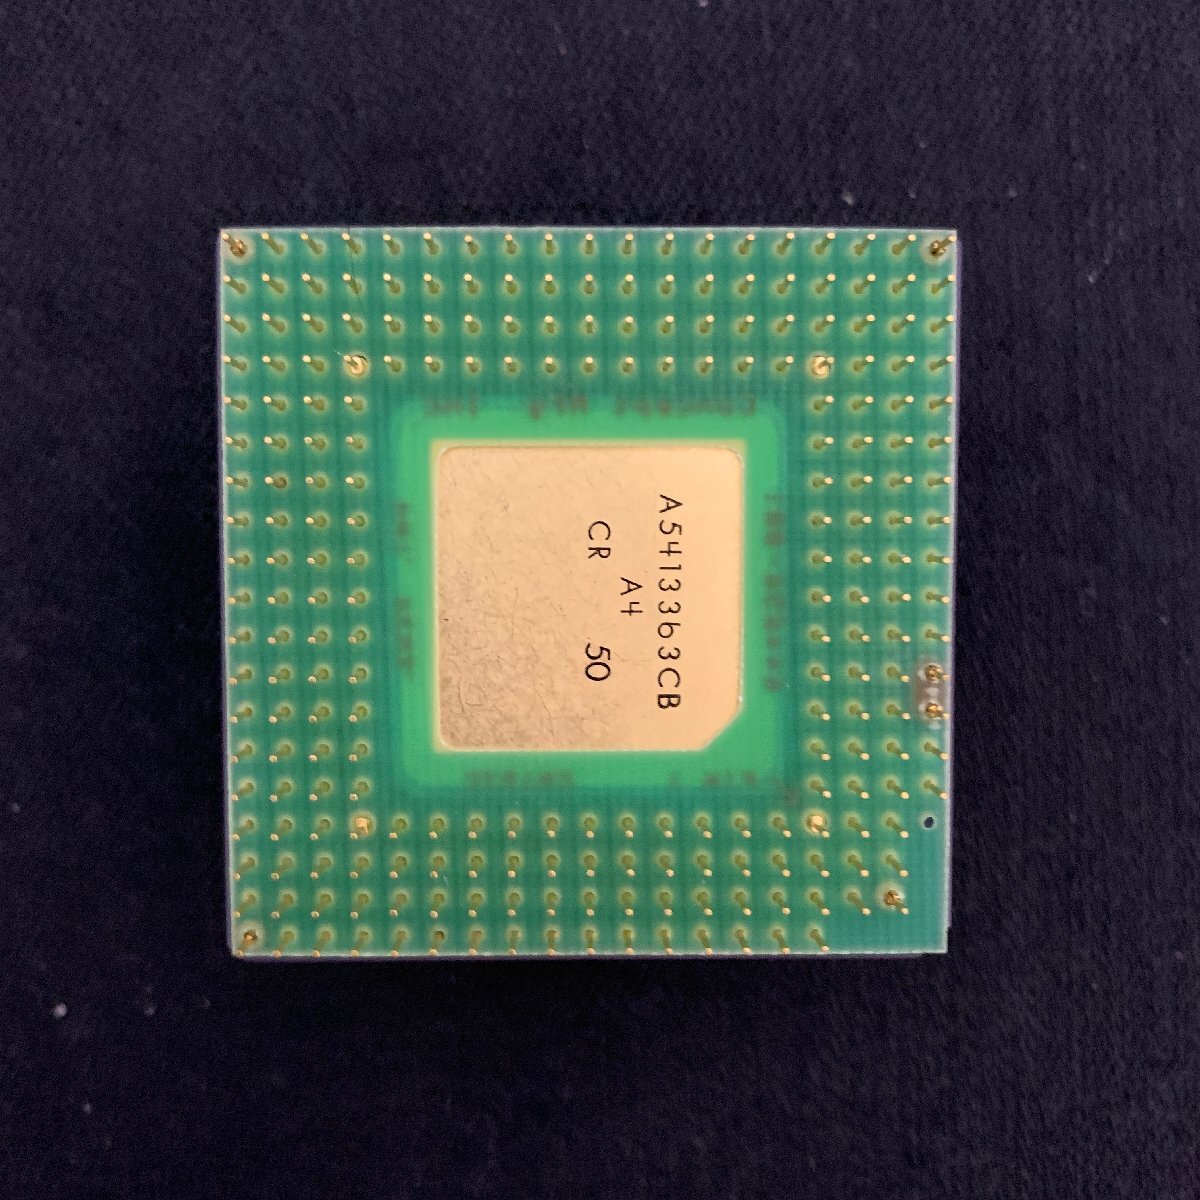 L132 Intel повышающая передача процессор PODP5V83 SU014 V2.1 работа чистка проверка settled 